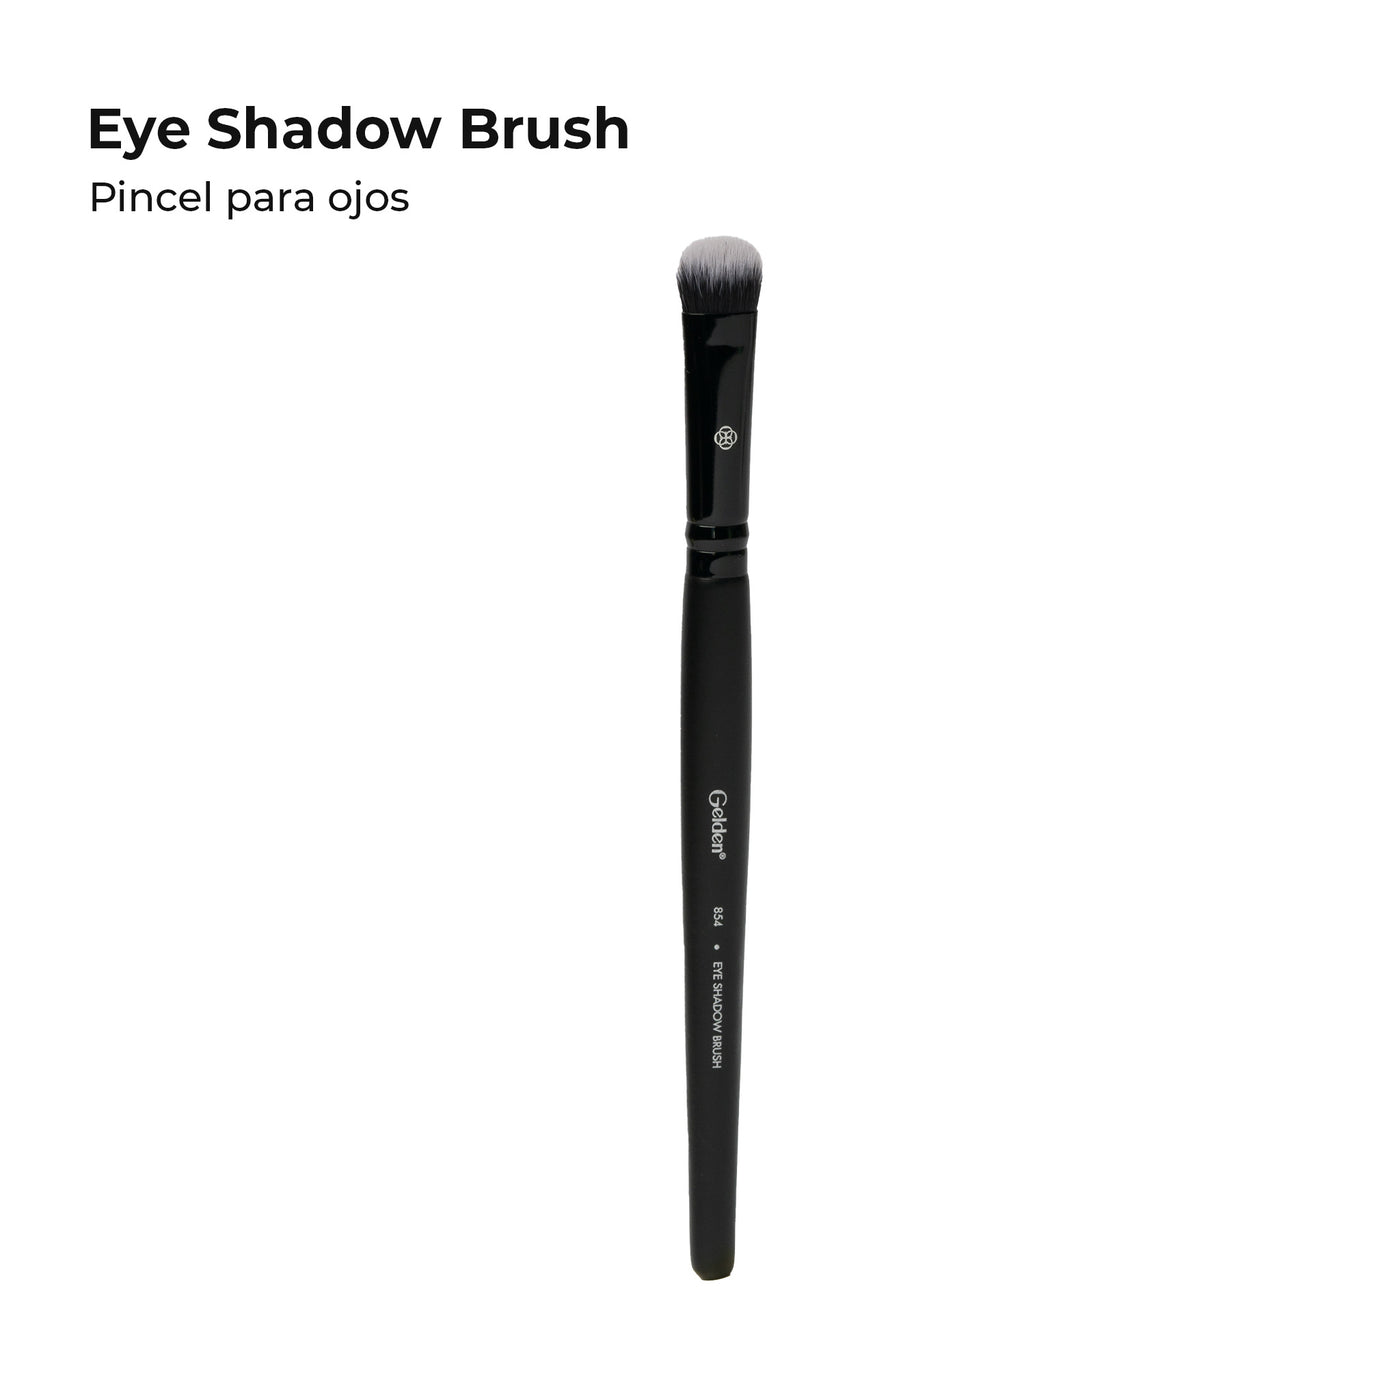 Pincel para Ojos (Eye Shadow Brush)